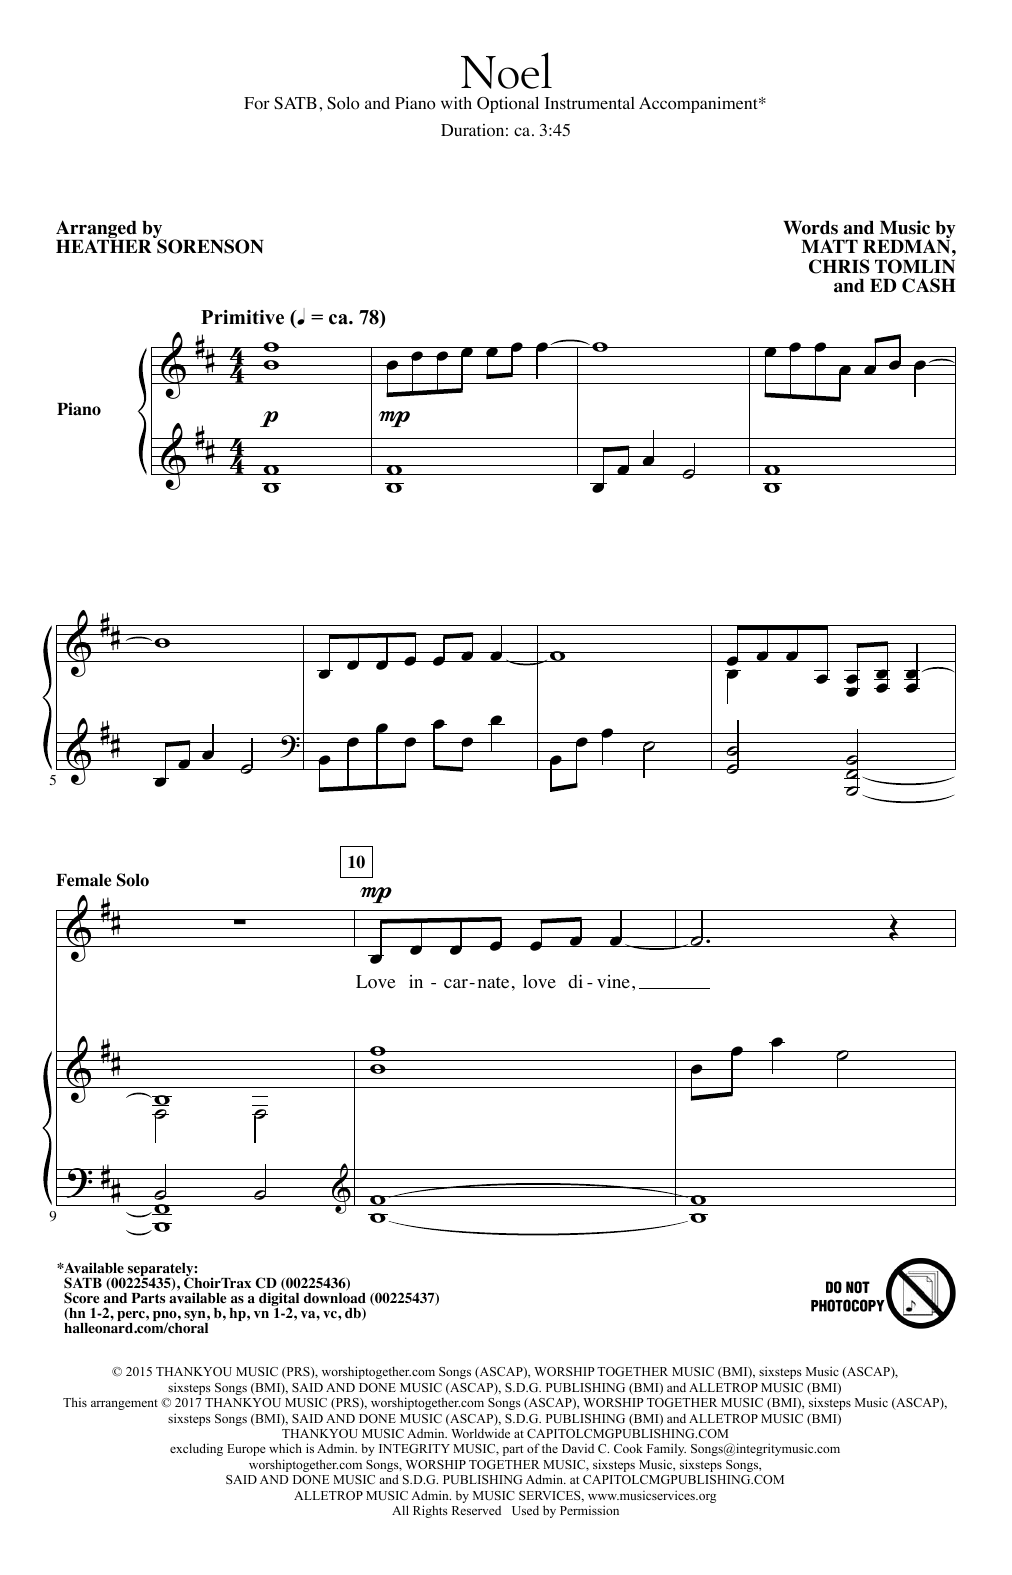 Chris Tomlin Noel (feat. Lauren Daigle) (arr. Heather Sorenson) sheet music notes and chords arranged for SATB Choir